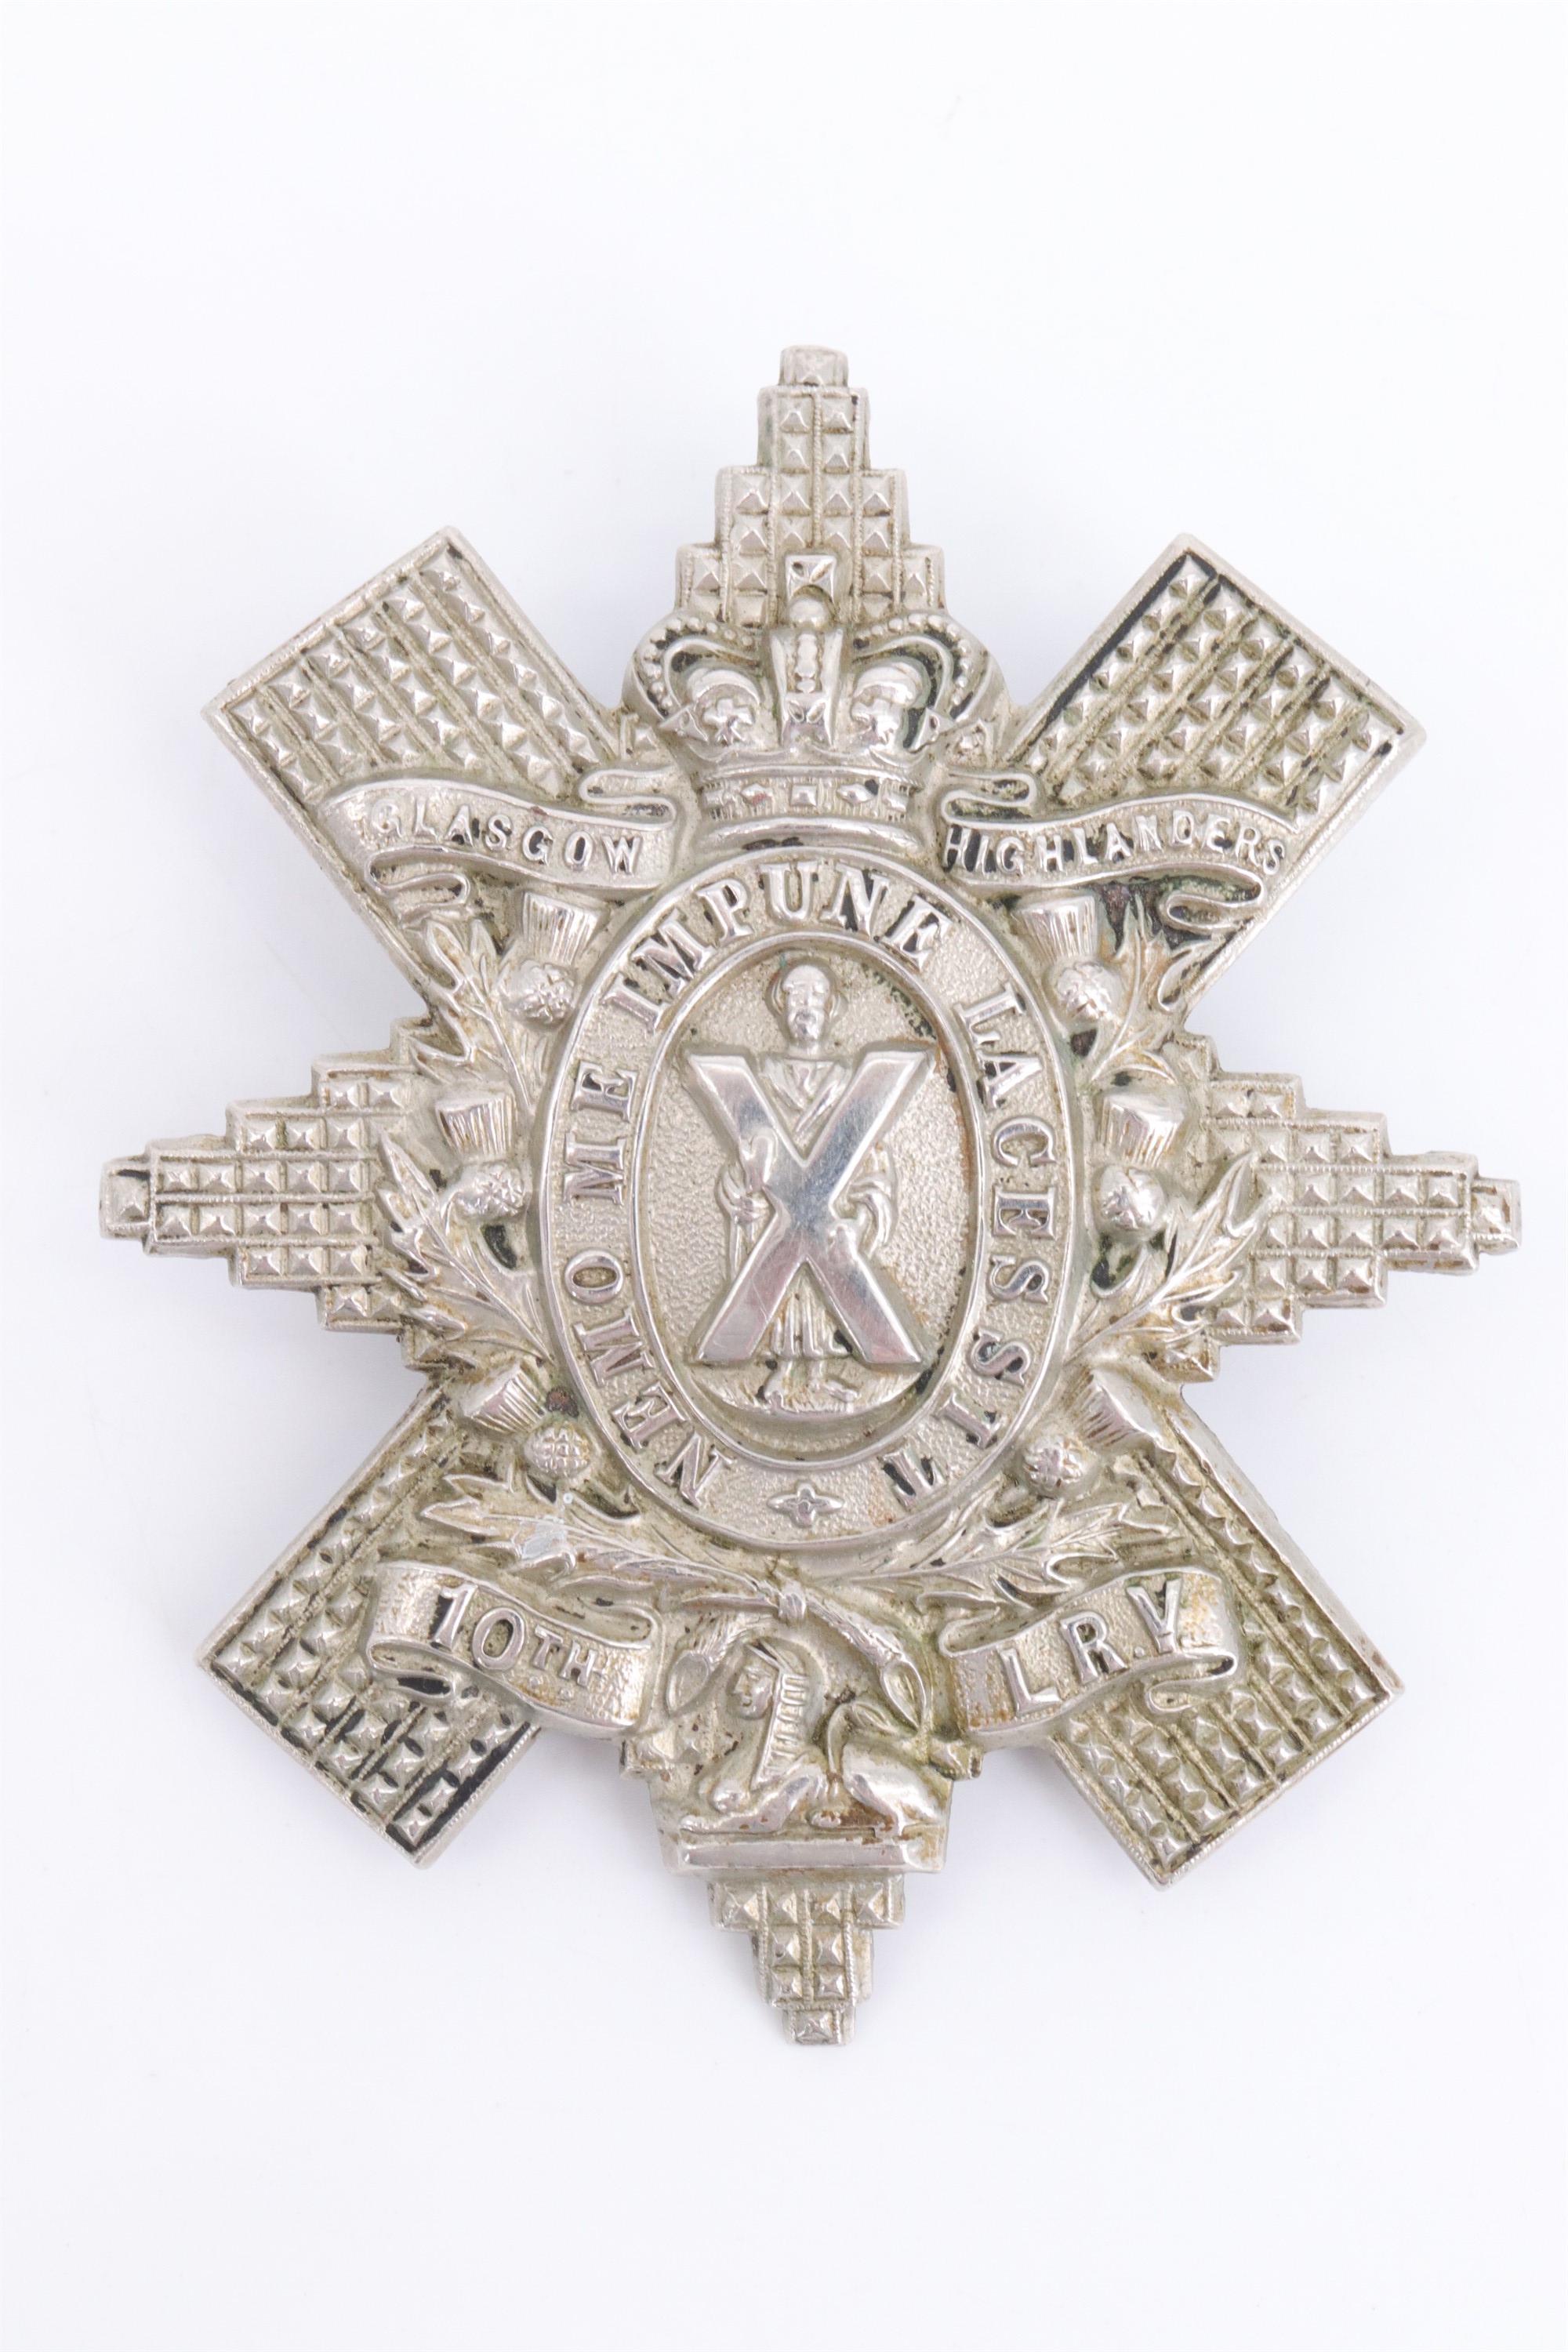 A Victorian 10th Lanarkshire Rifle Volunteers cap badge